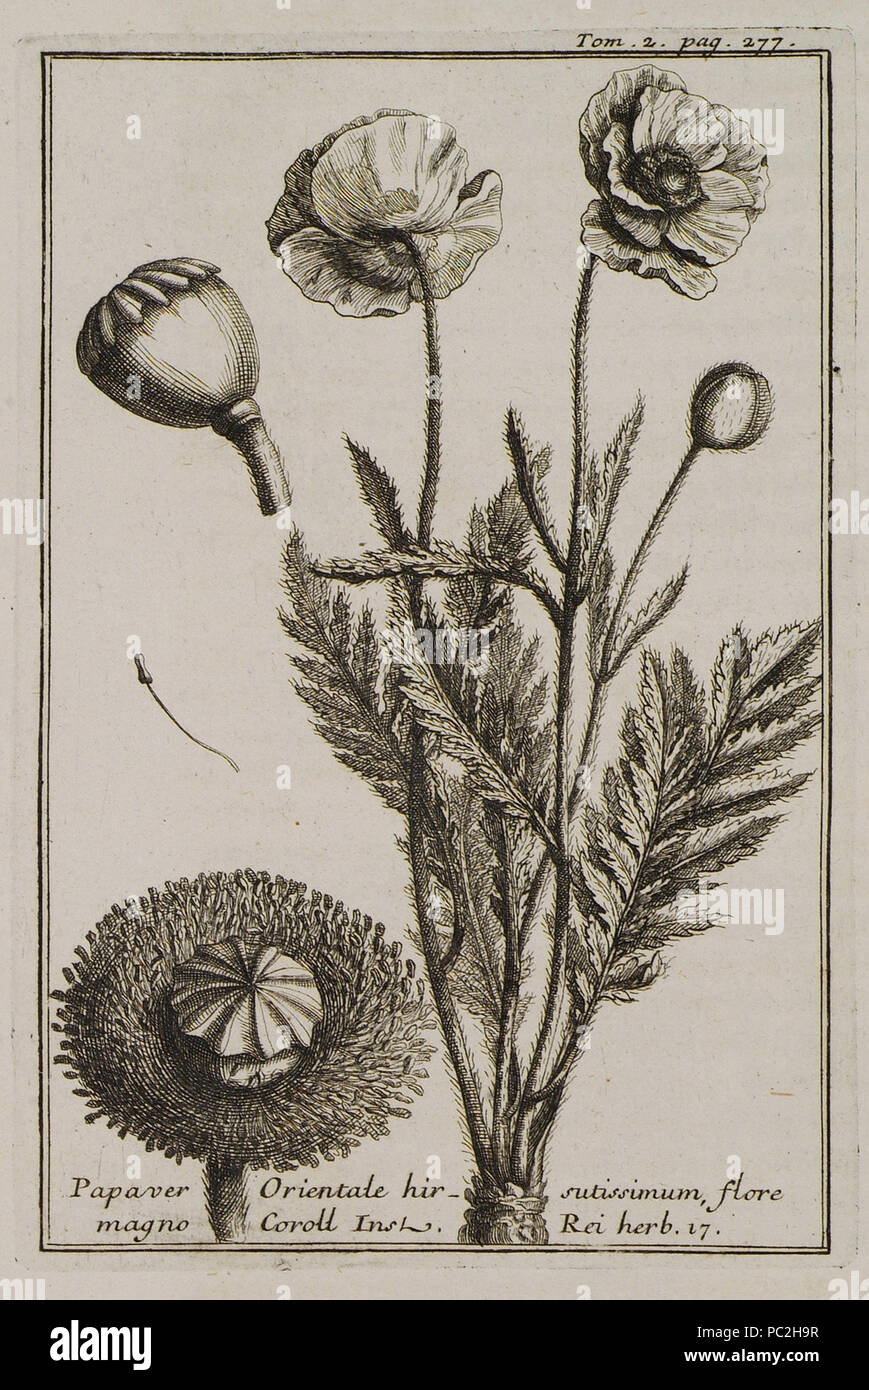 466 Papaver Orientale hirsutissimum, flore magno Coroll Inst Rei herb 17 - Tournefort Joseph Pitton De - 1717 Stock Photo